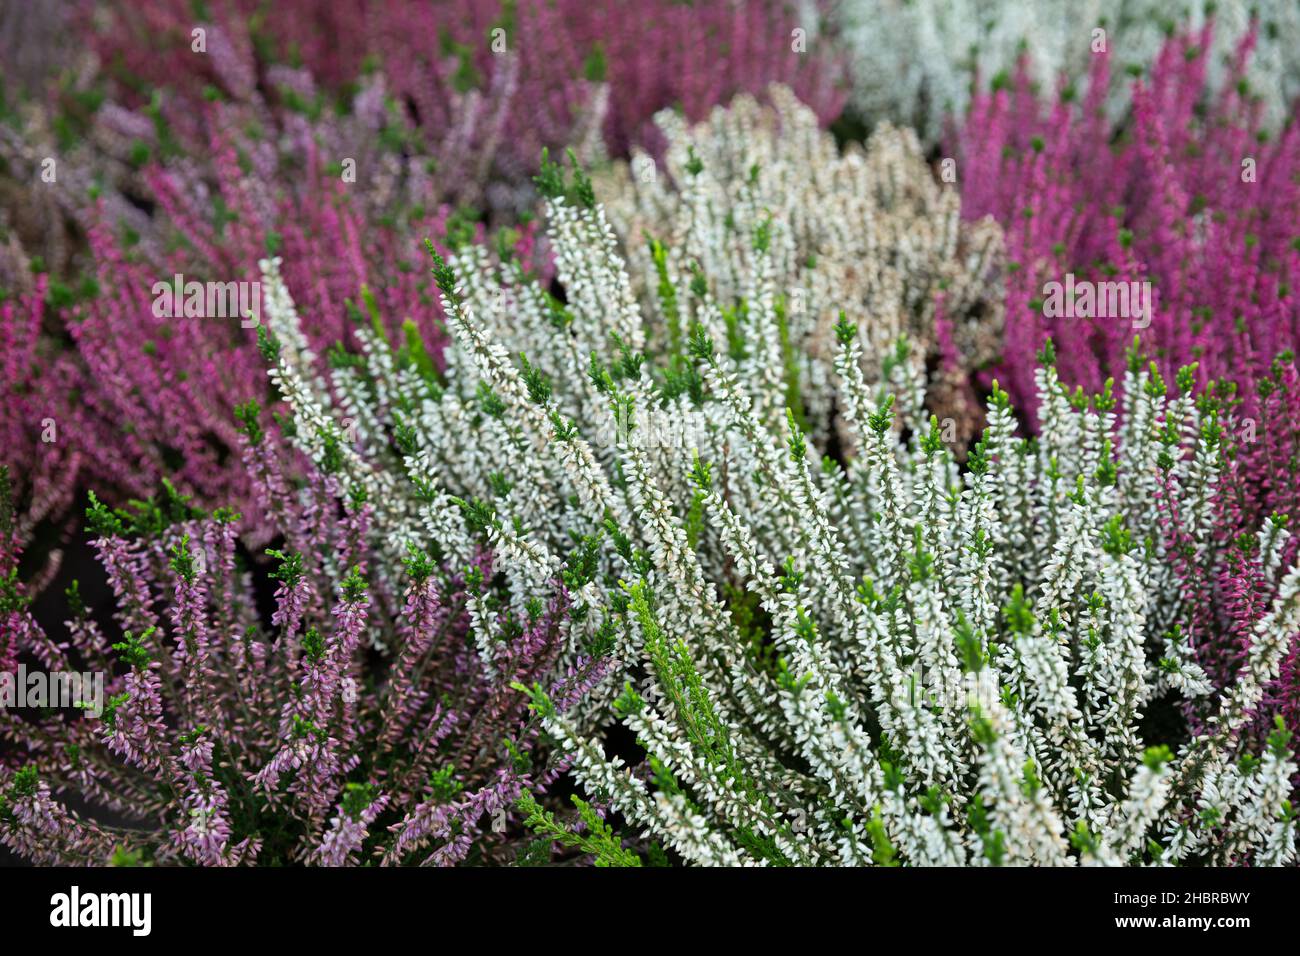 Bright image of flowering heather plants growing in garden Stock Photo